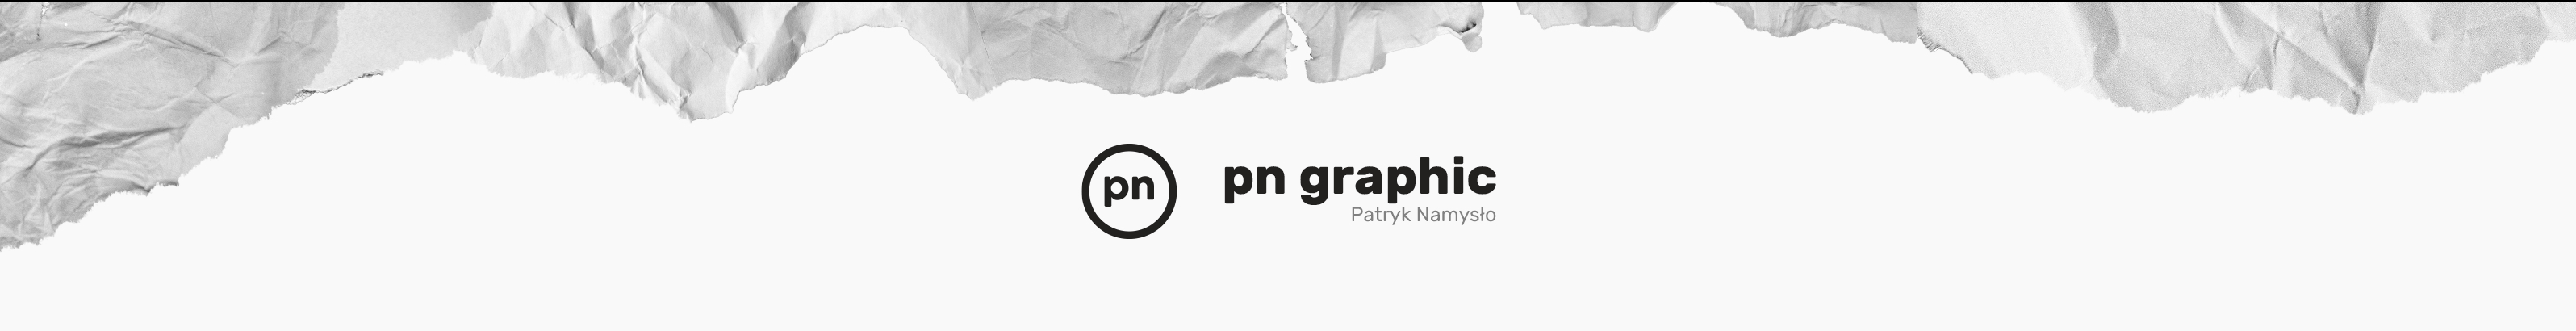 Patryk Namysło's profile banner